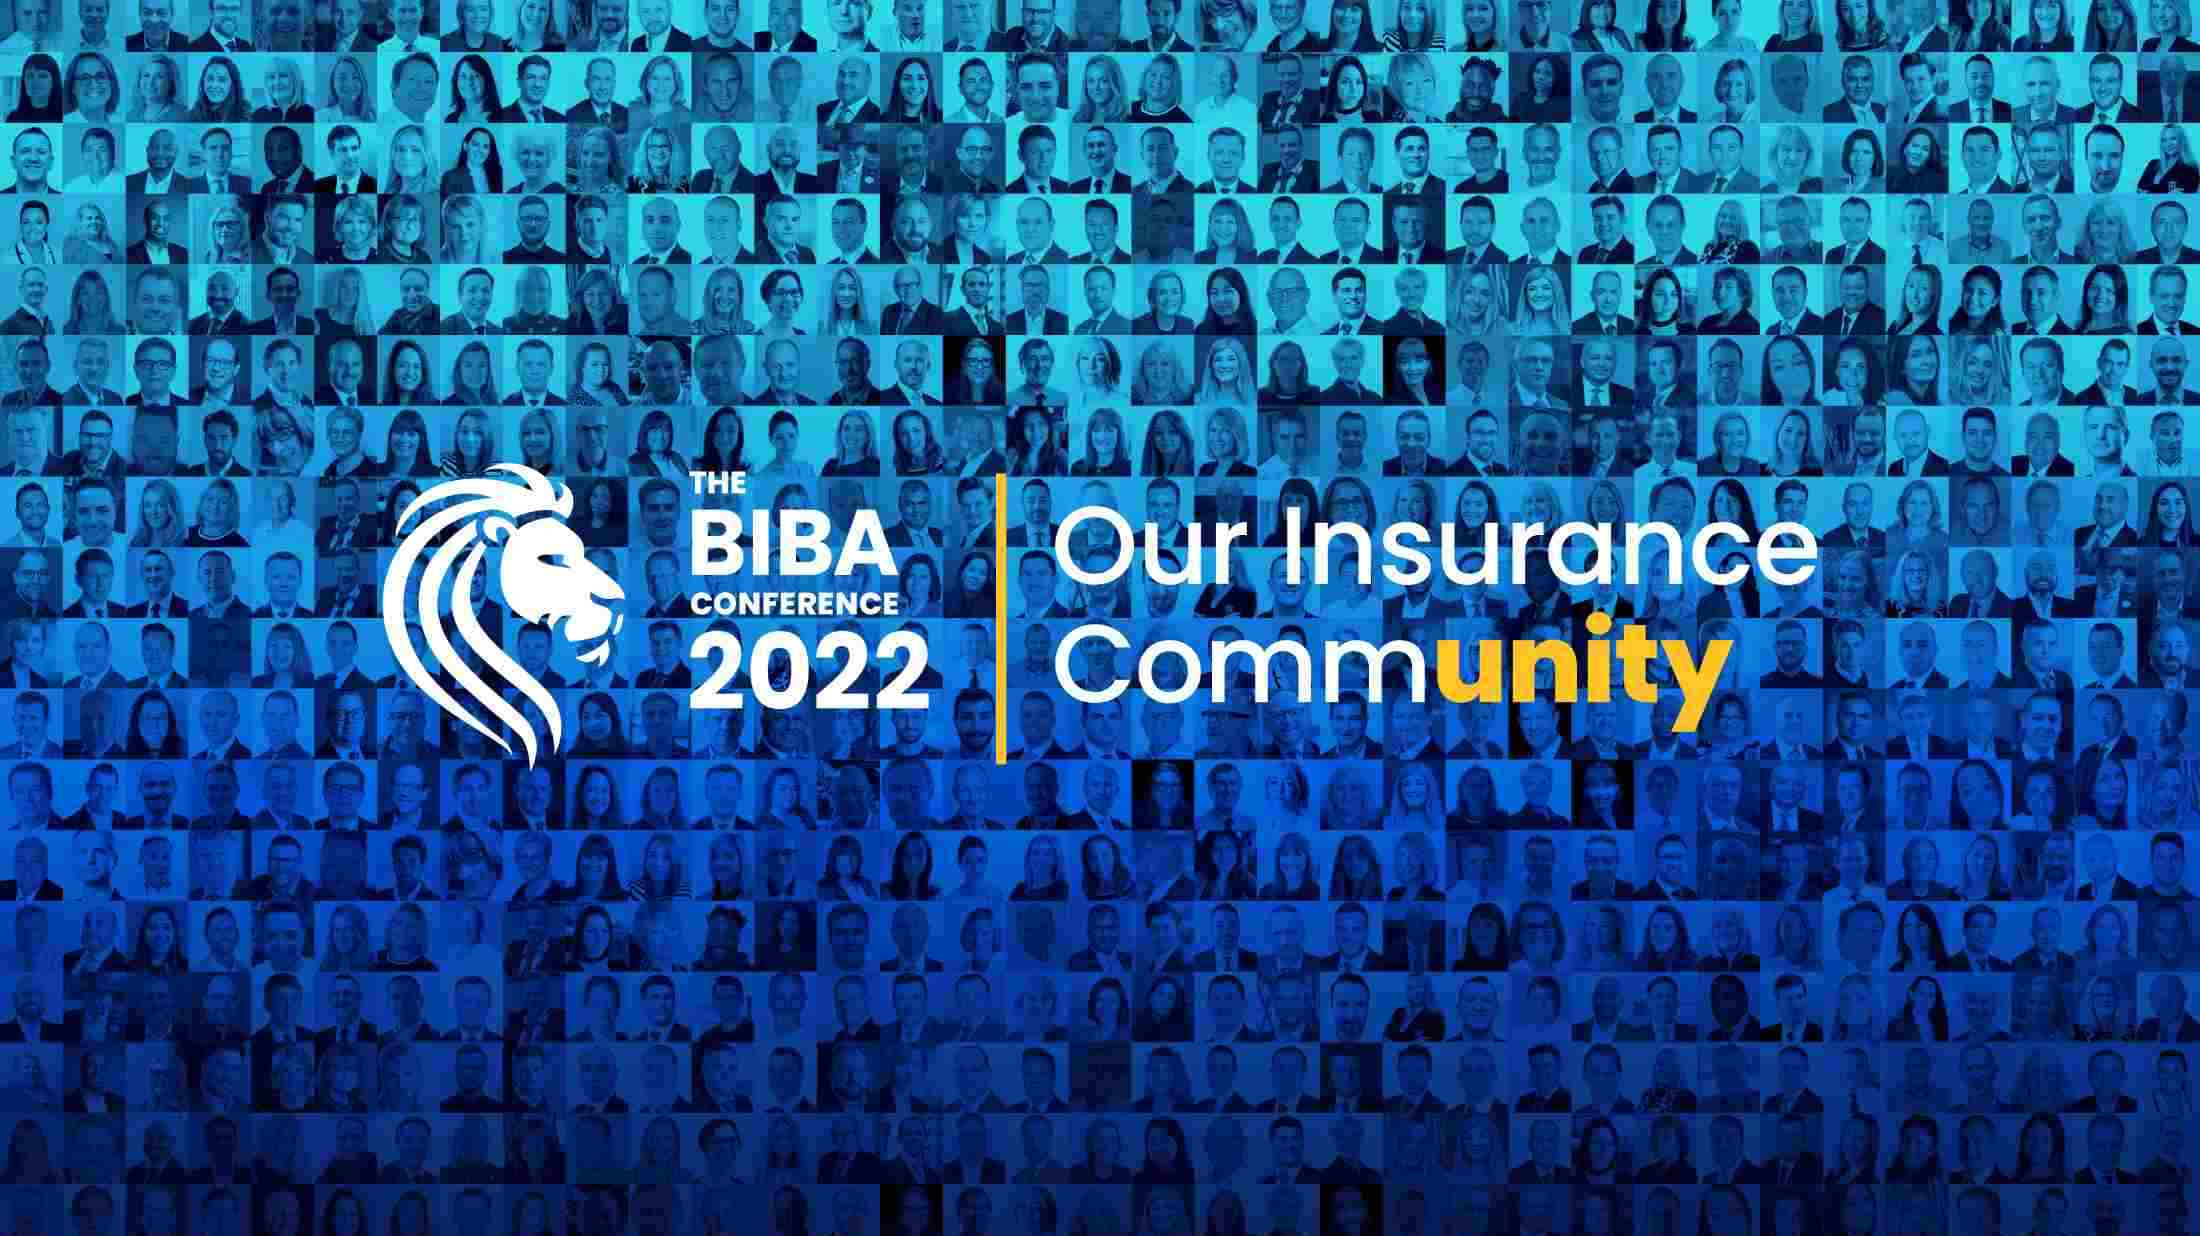 BIBA 2022 conference logo